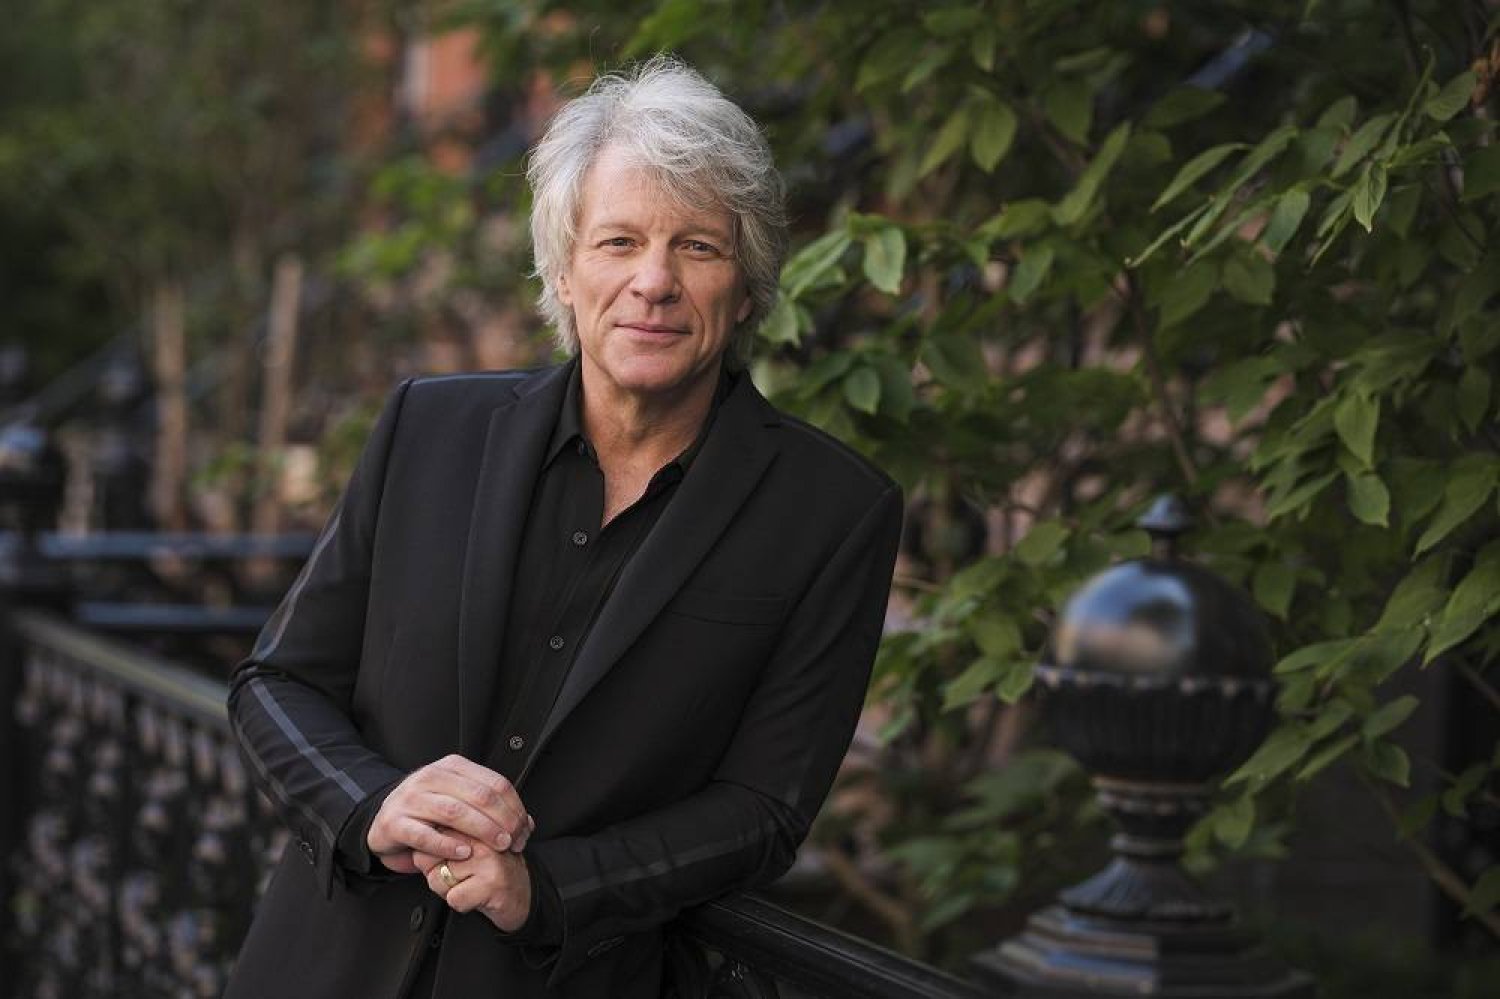 Jon Bon Jovi poses for a portrait in New York on Sept. 23, 2020 to promote his new album "2020". (AP)